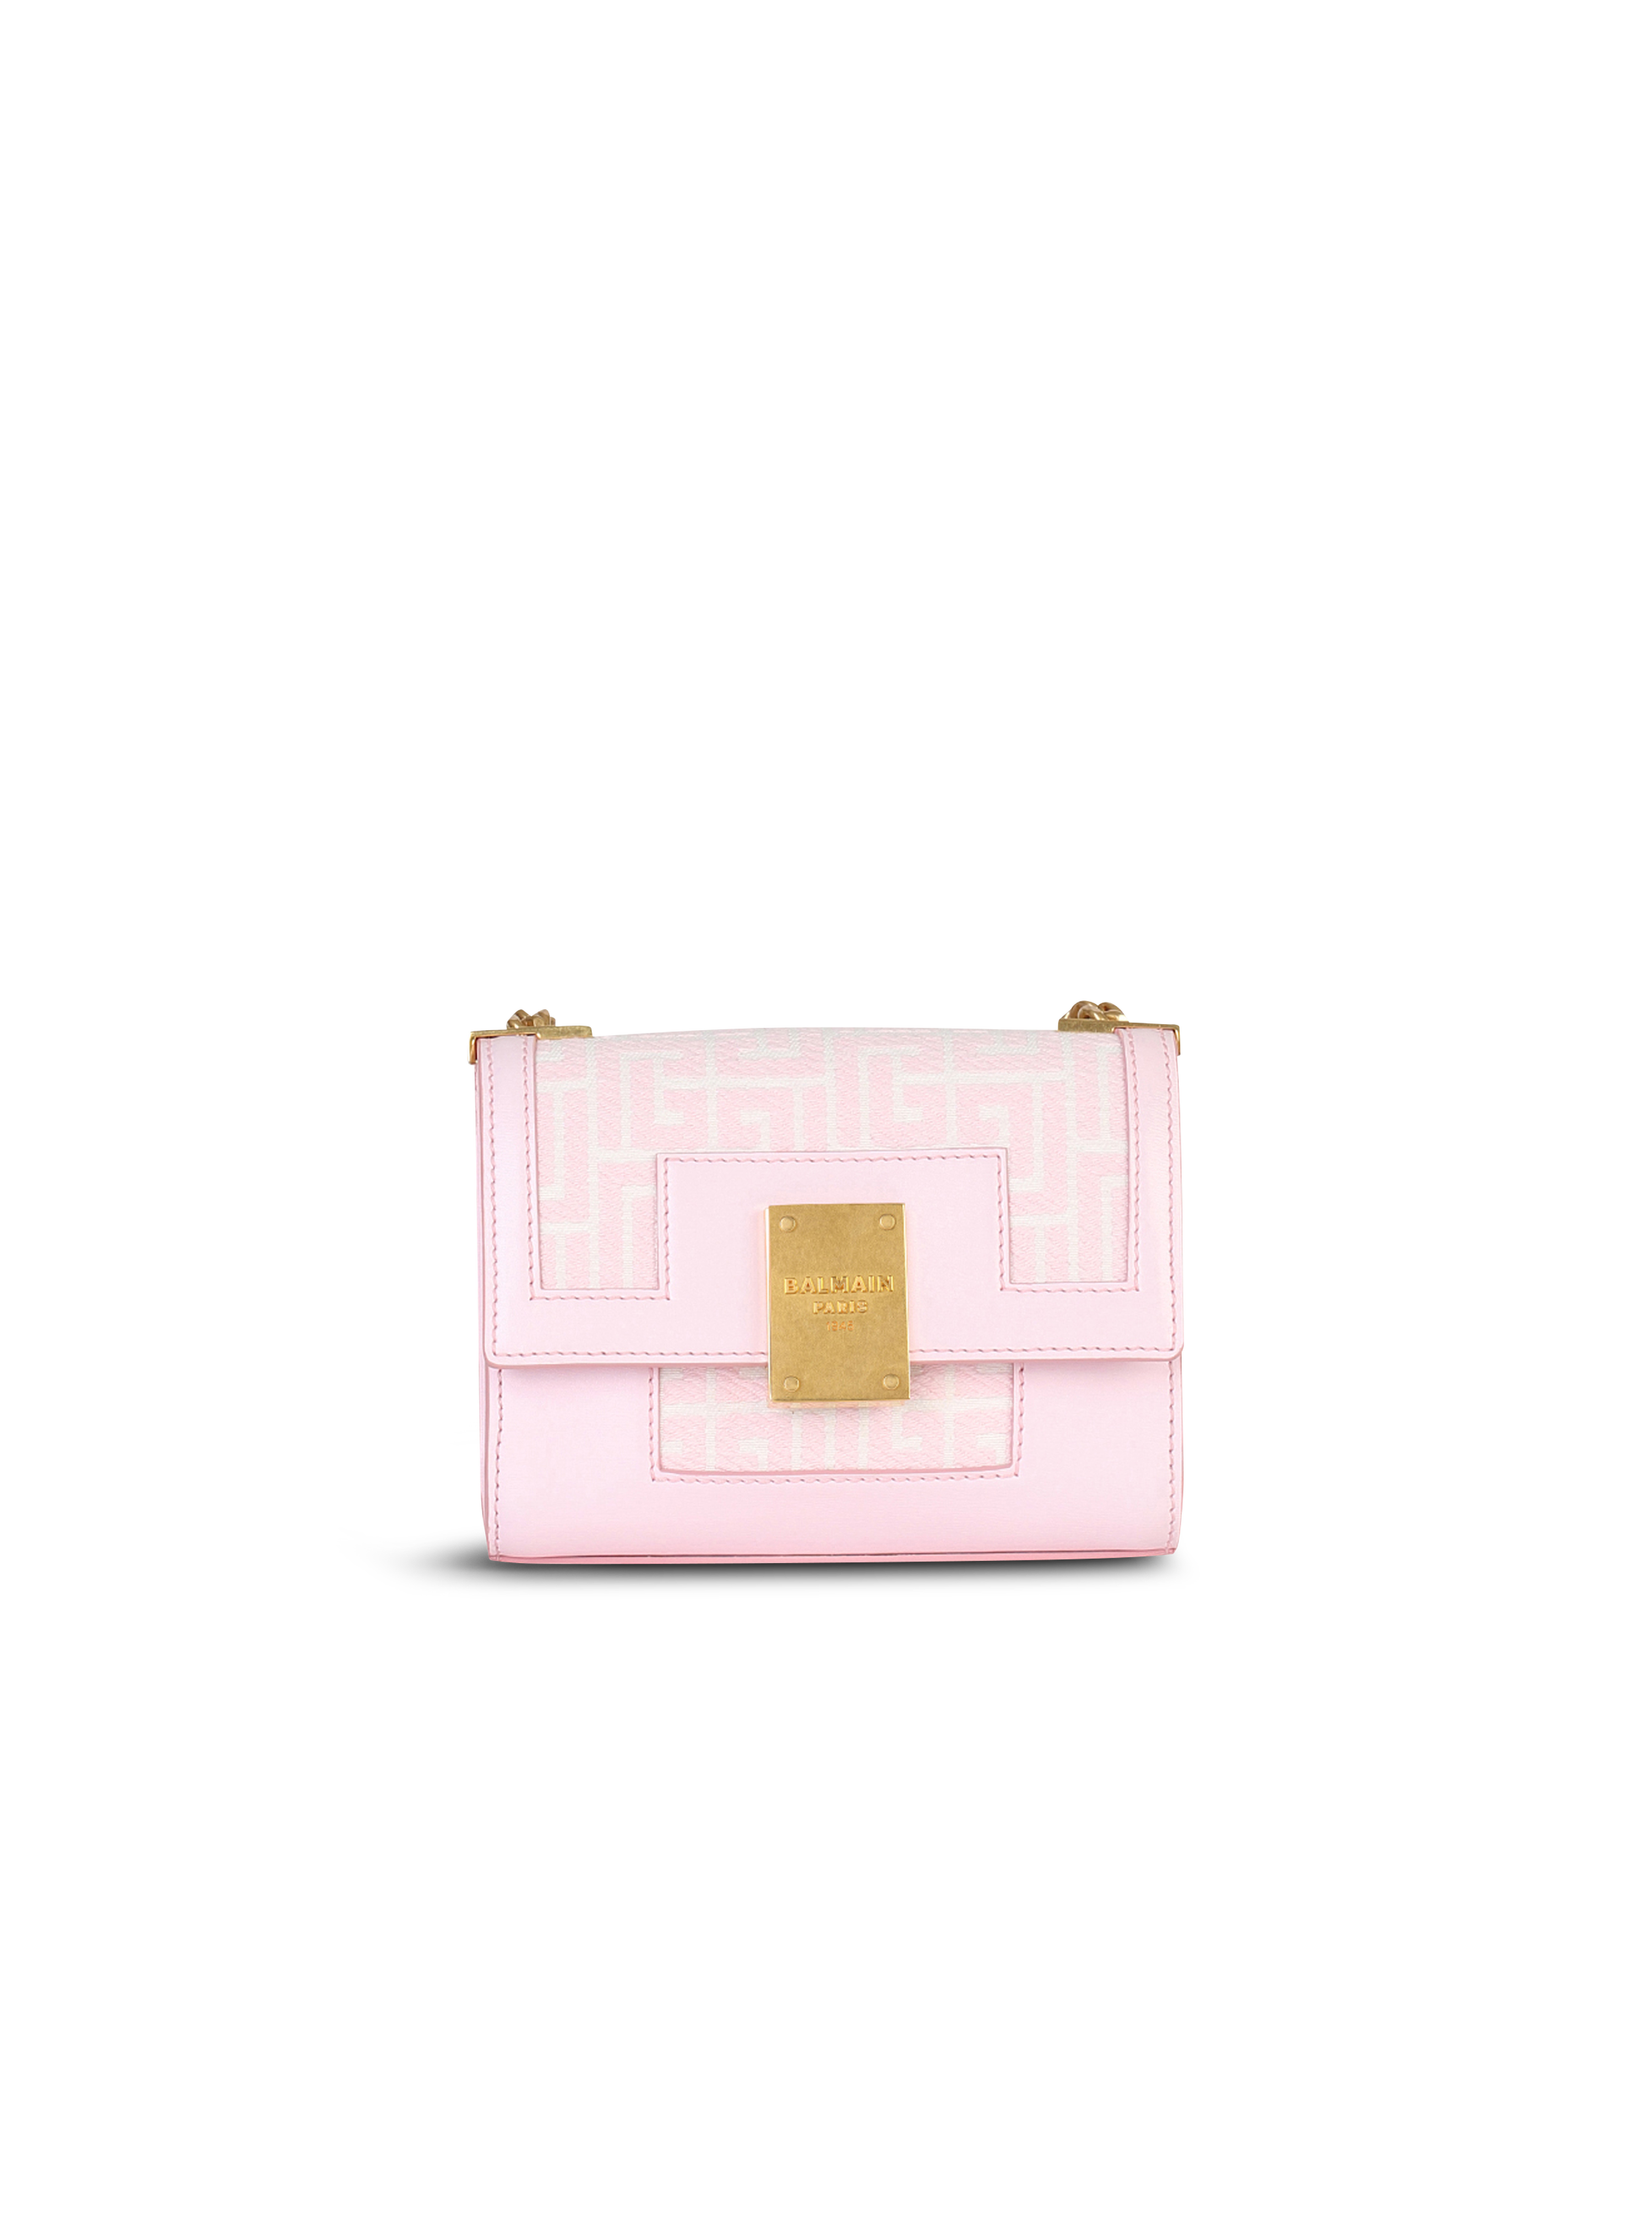 Small-sized bicolor jacquard 1945 bag, pink